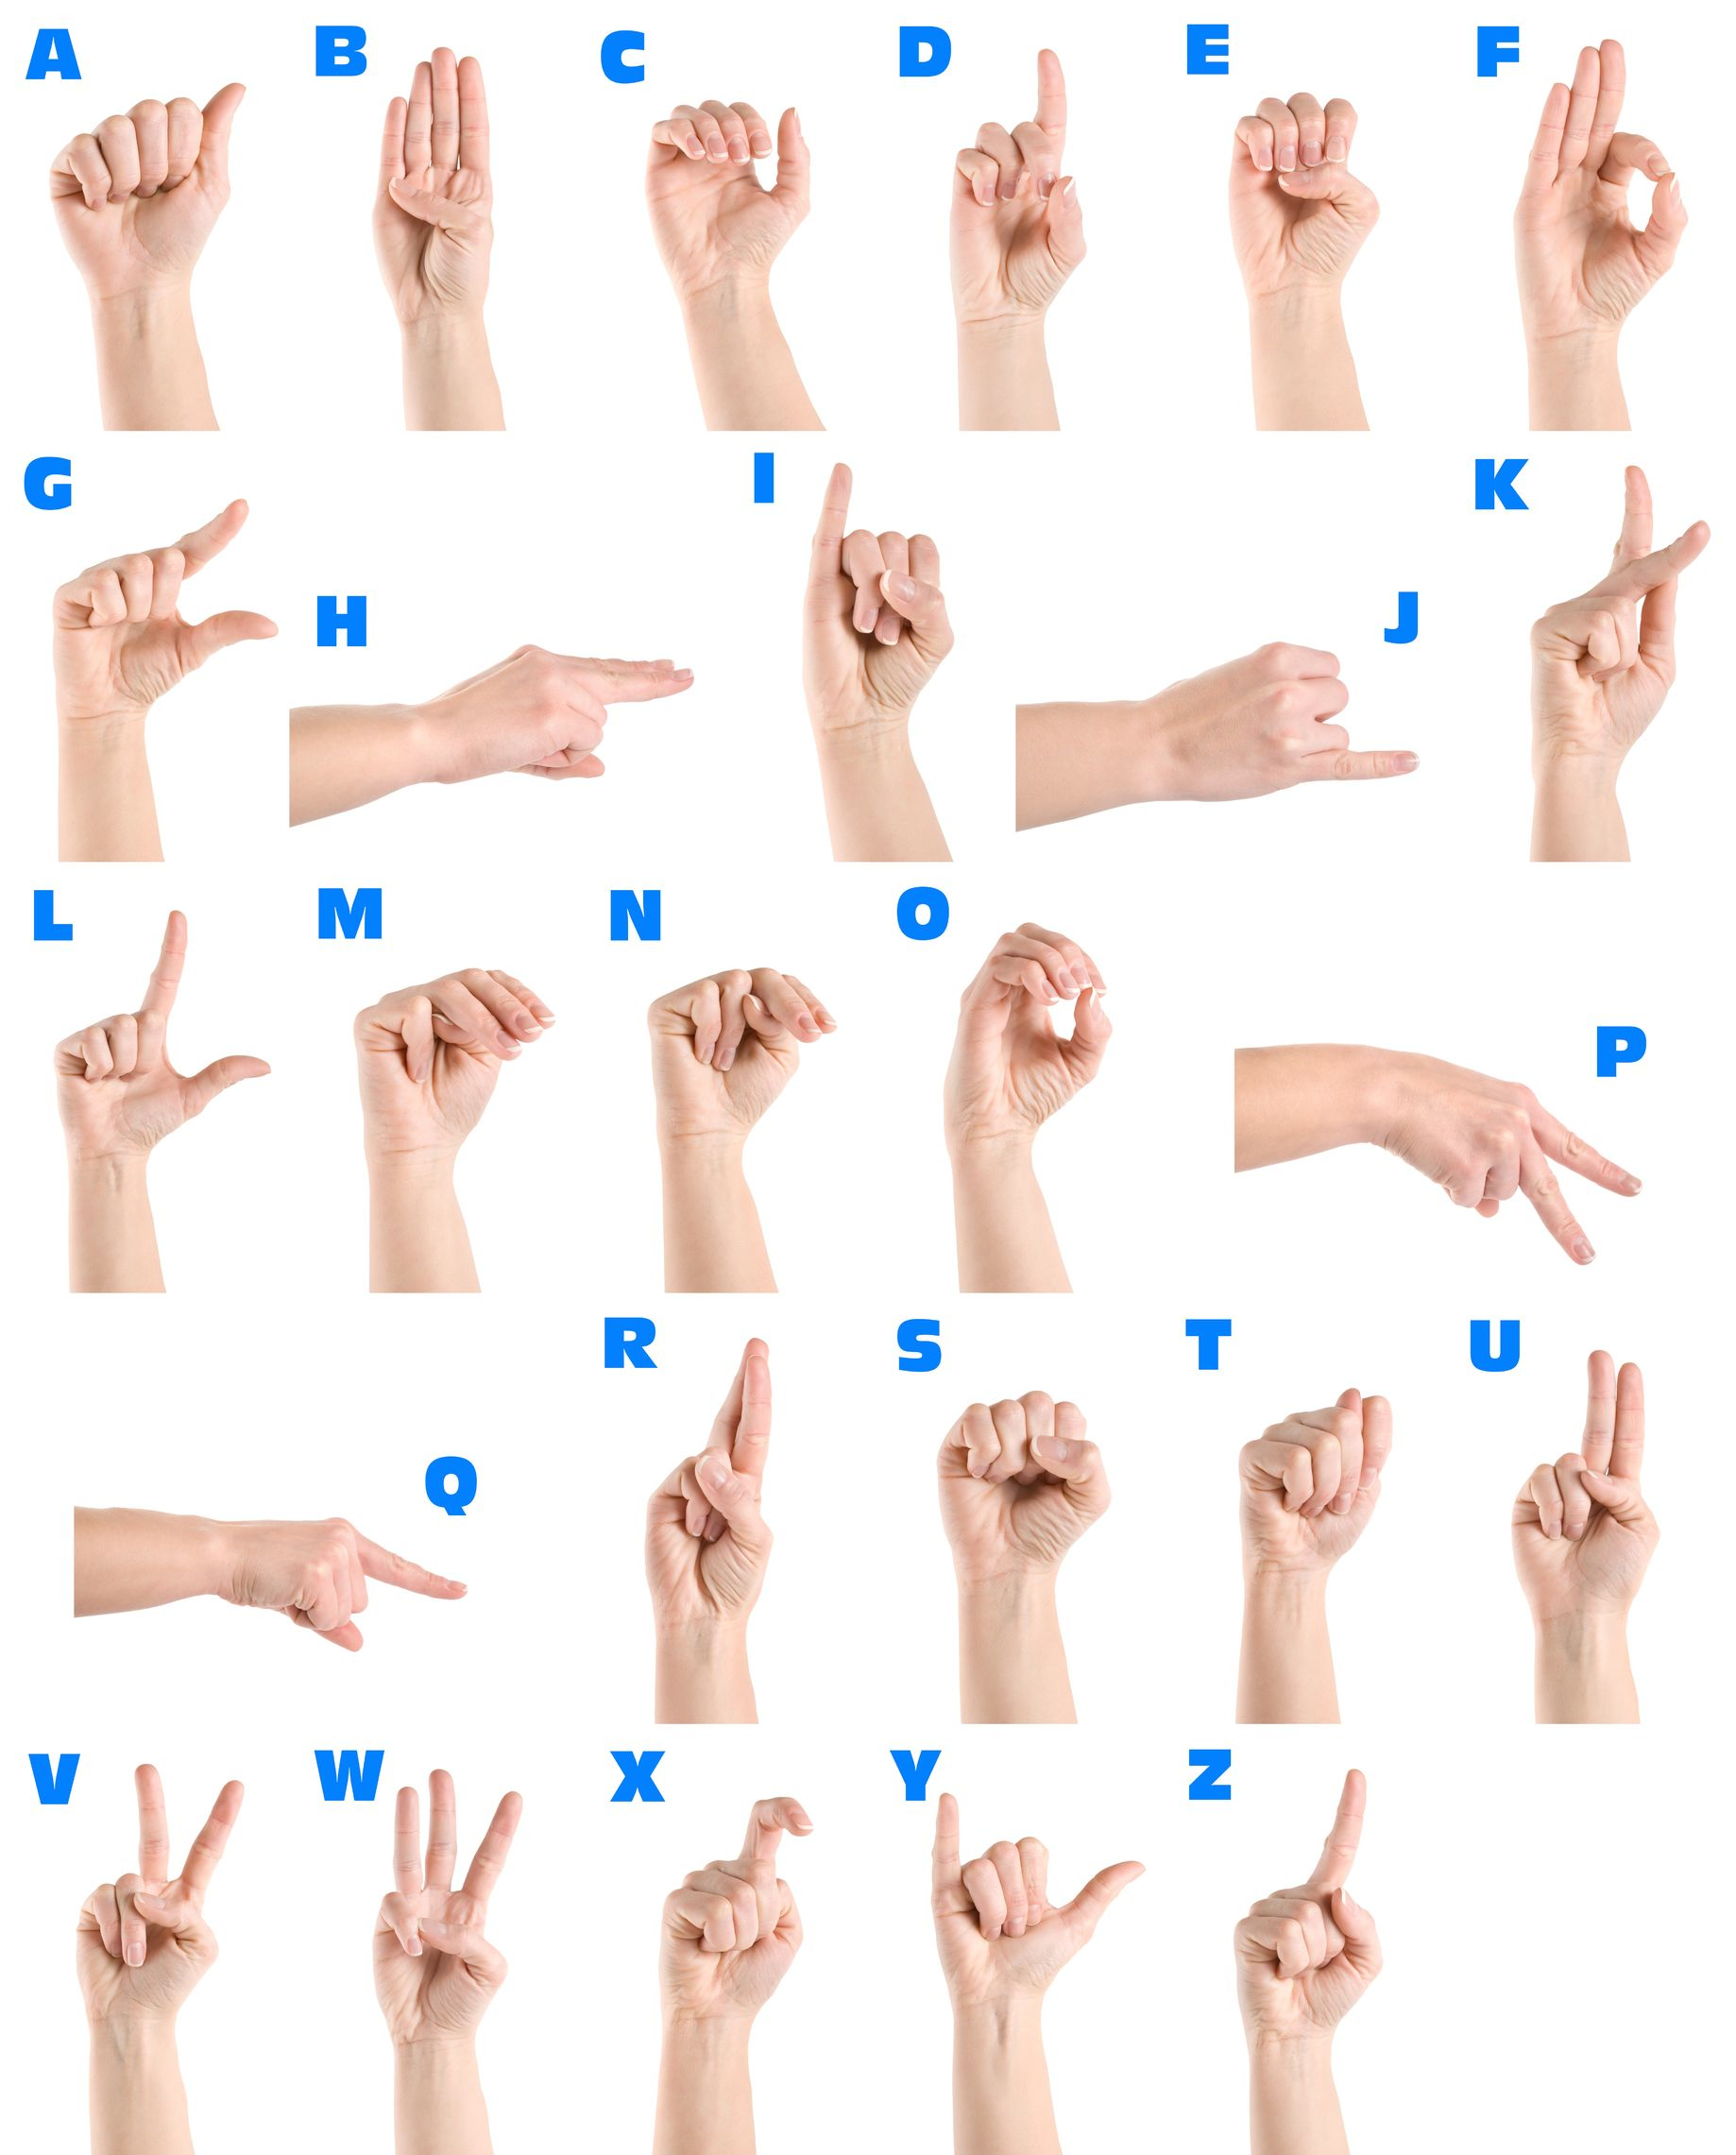 sign-language-new-calendar-template-site